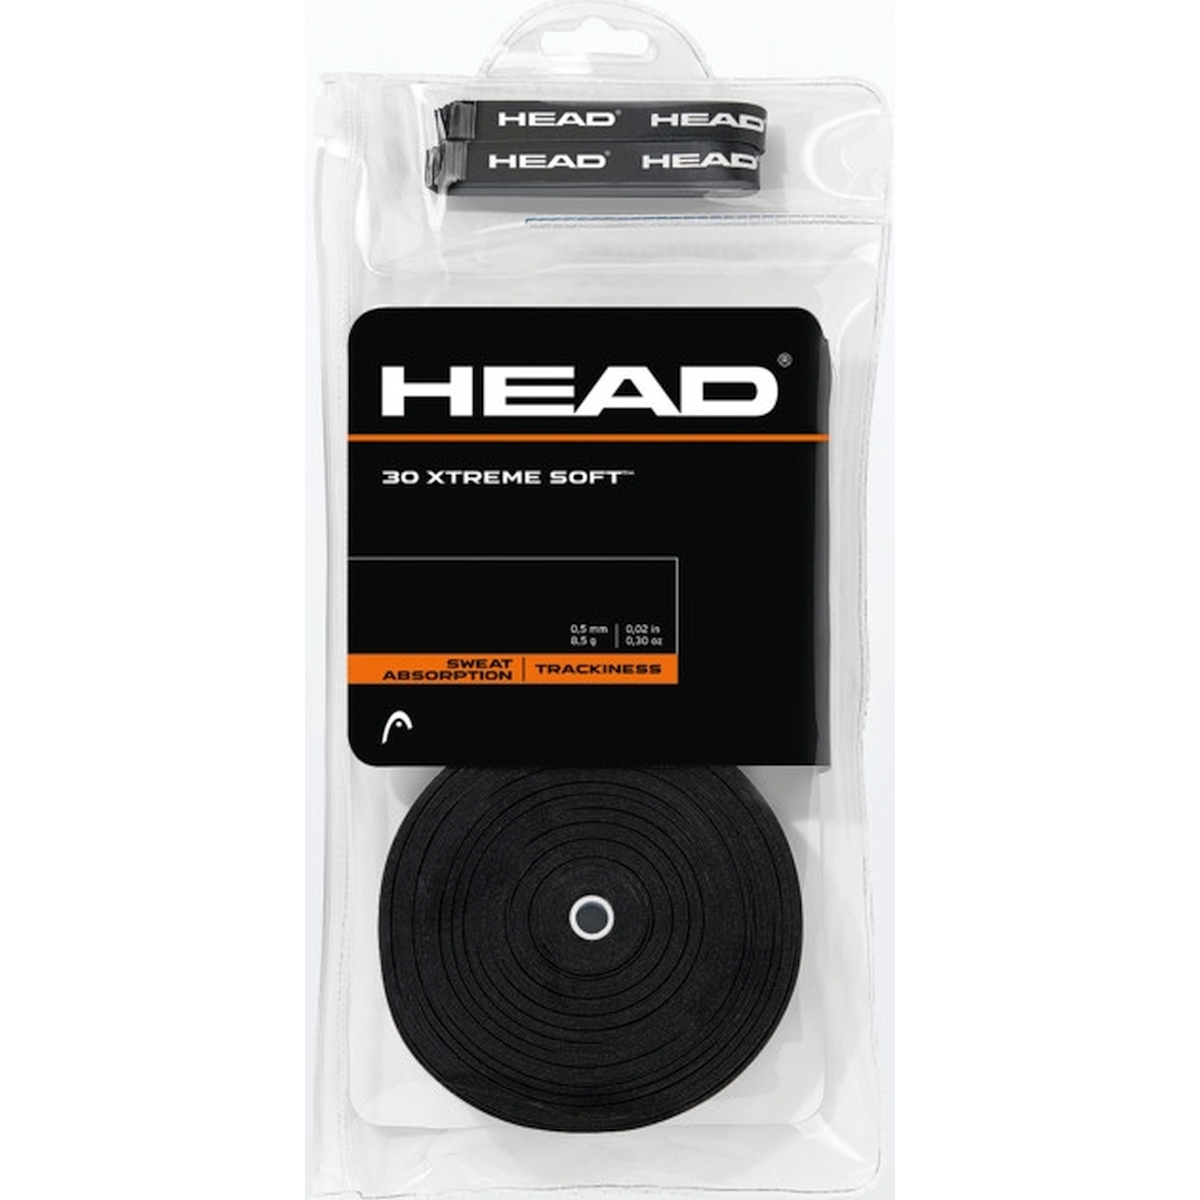 HEAD Xtreme Soft Grip Tape